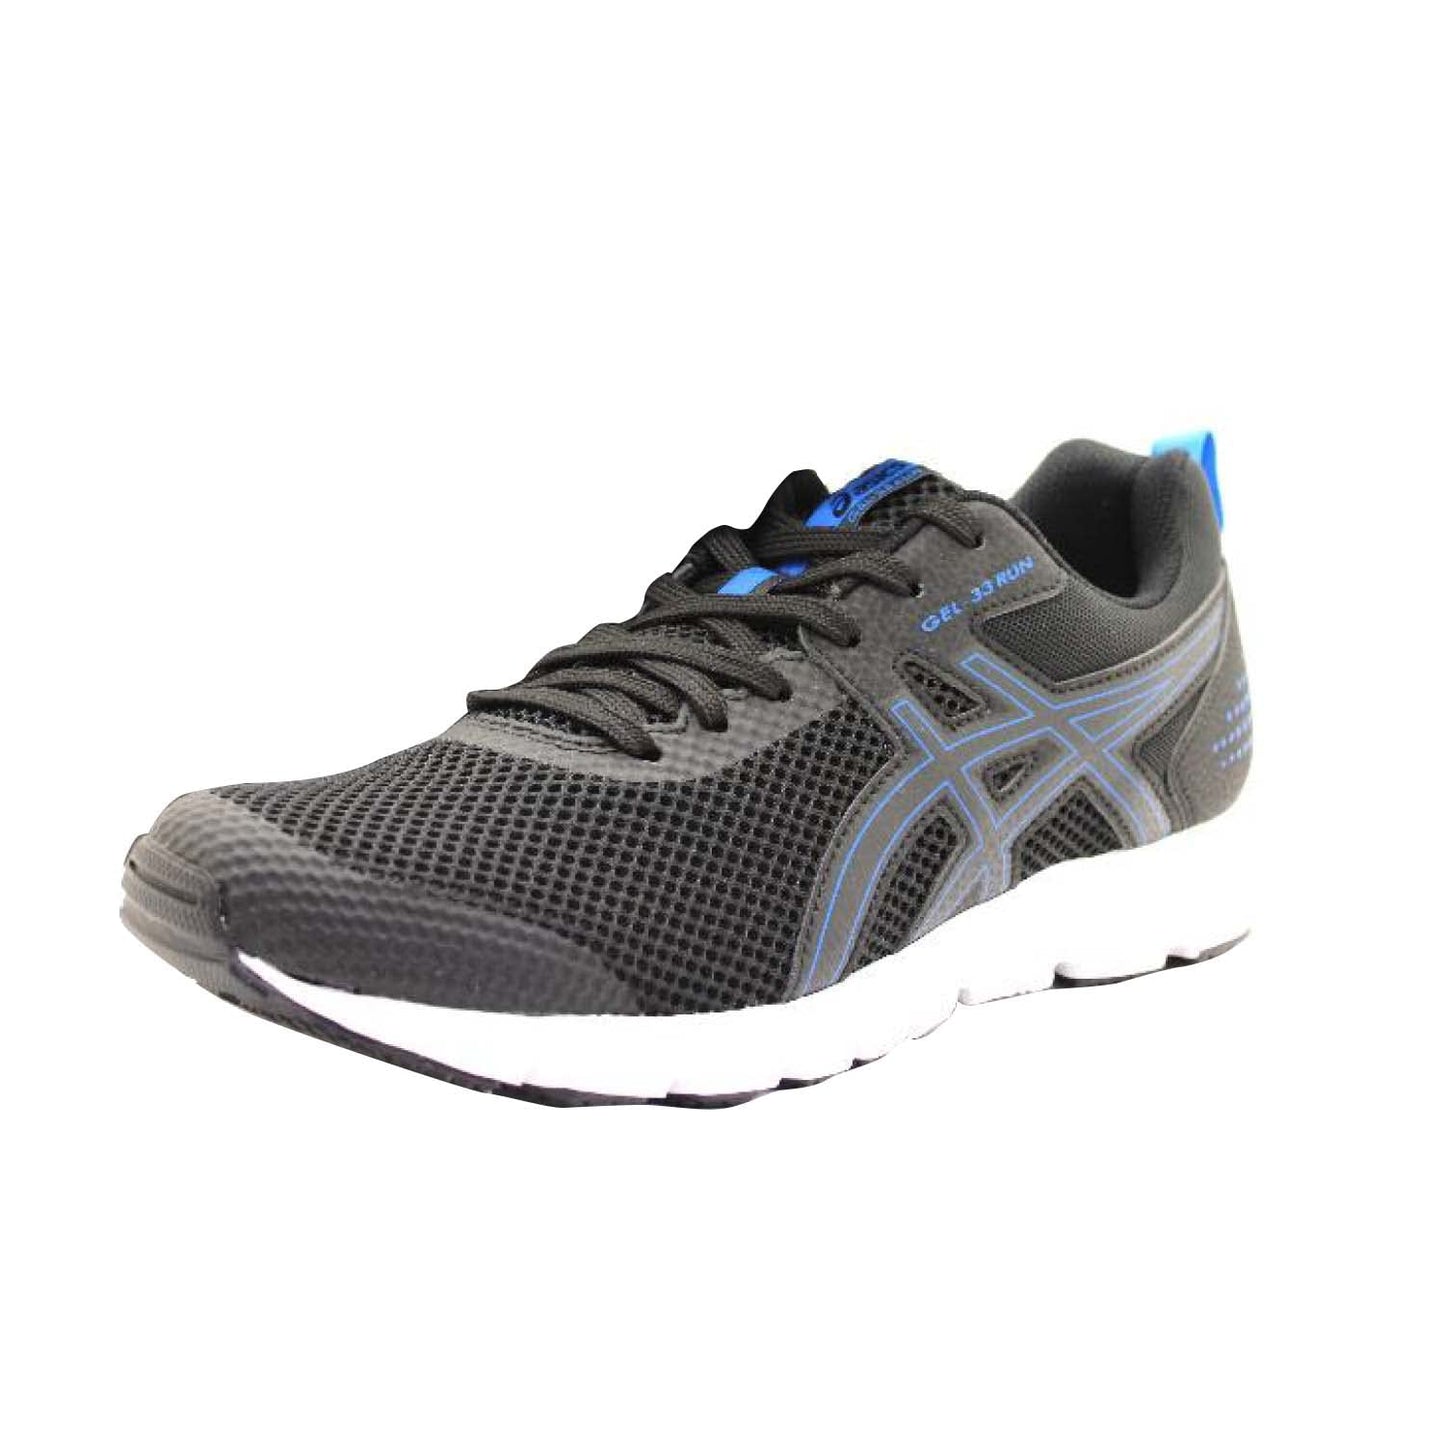 Asics GEL-33 Run Men's Running shoes - Best Price online Prokicksports.com